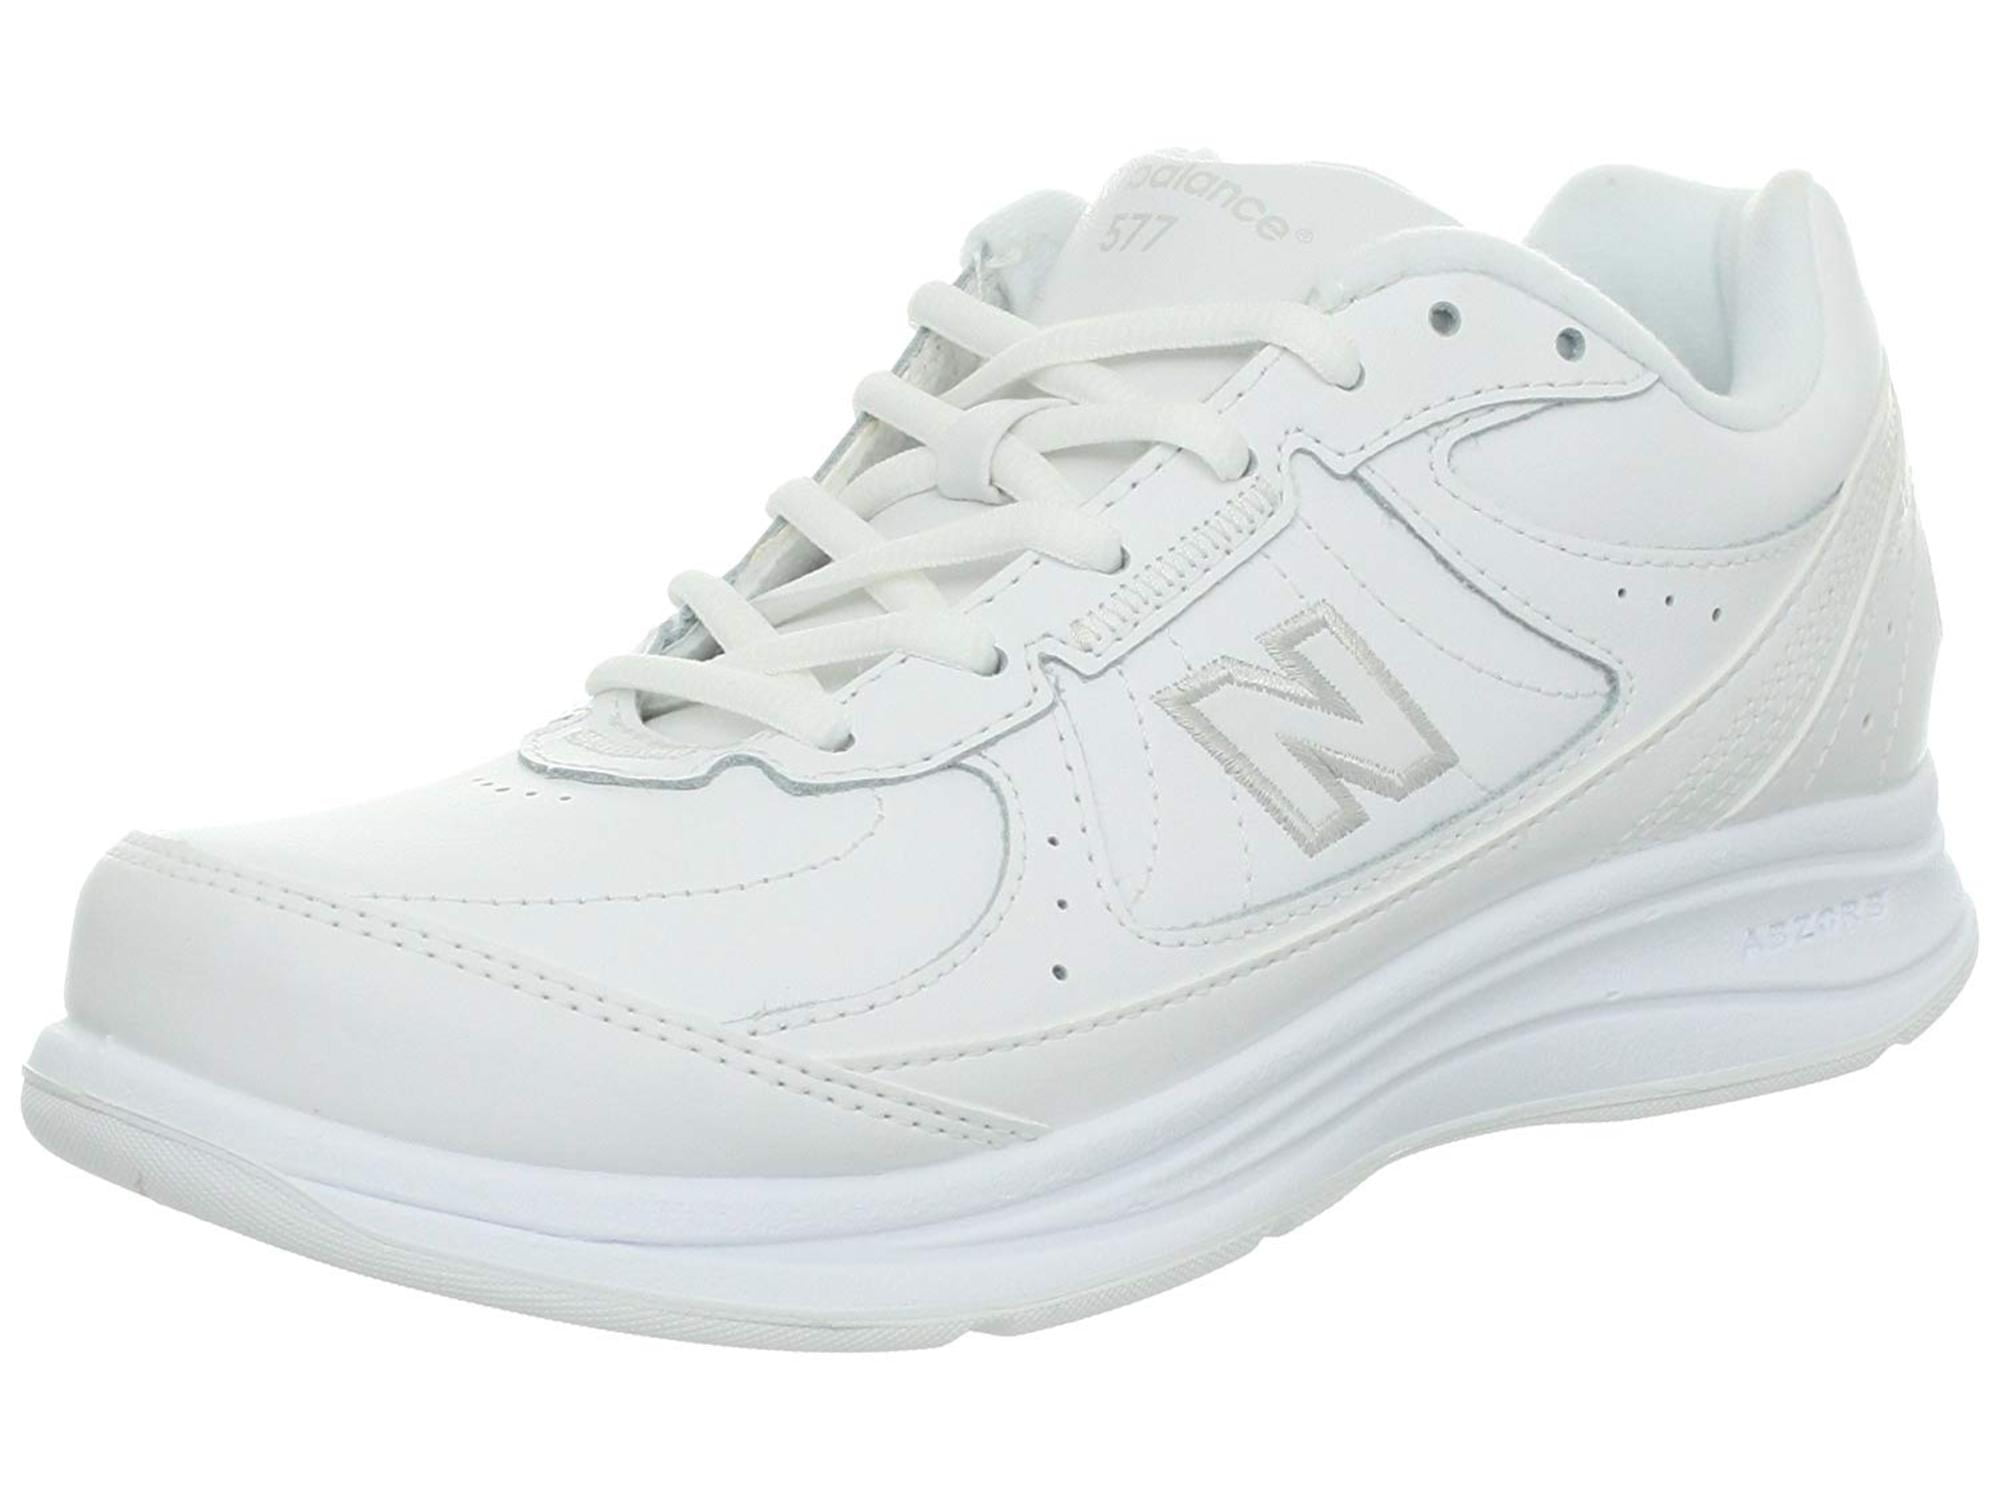 New Balance - New Balance Mens 577 Walking Shoe Low Top Lace Up Walking ...